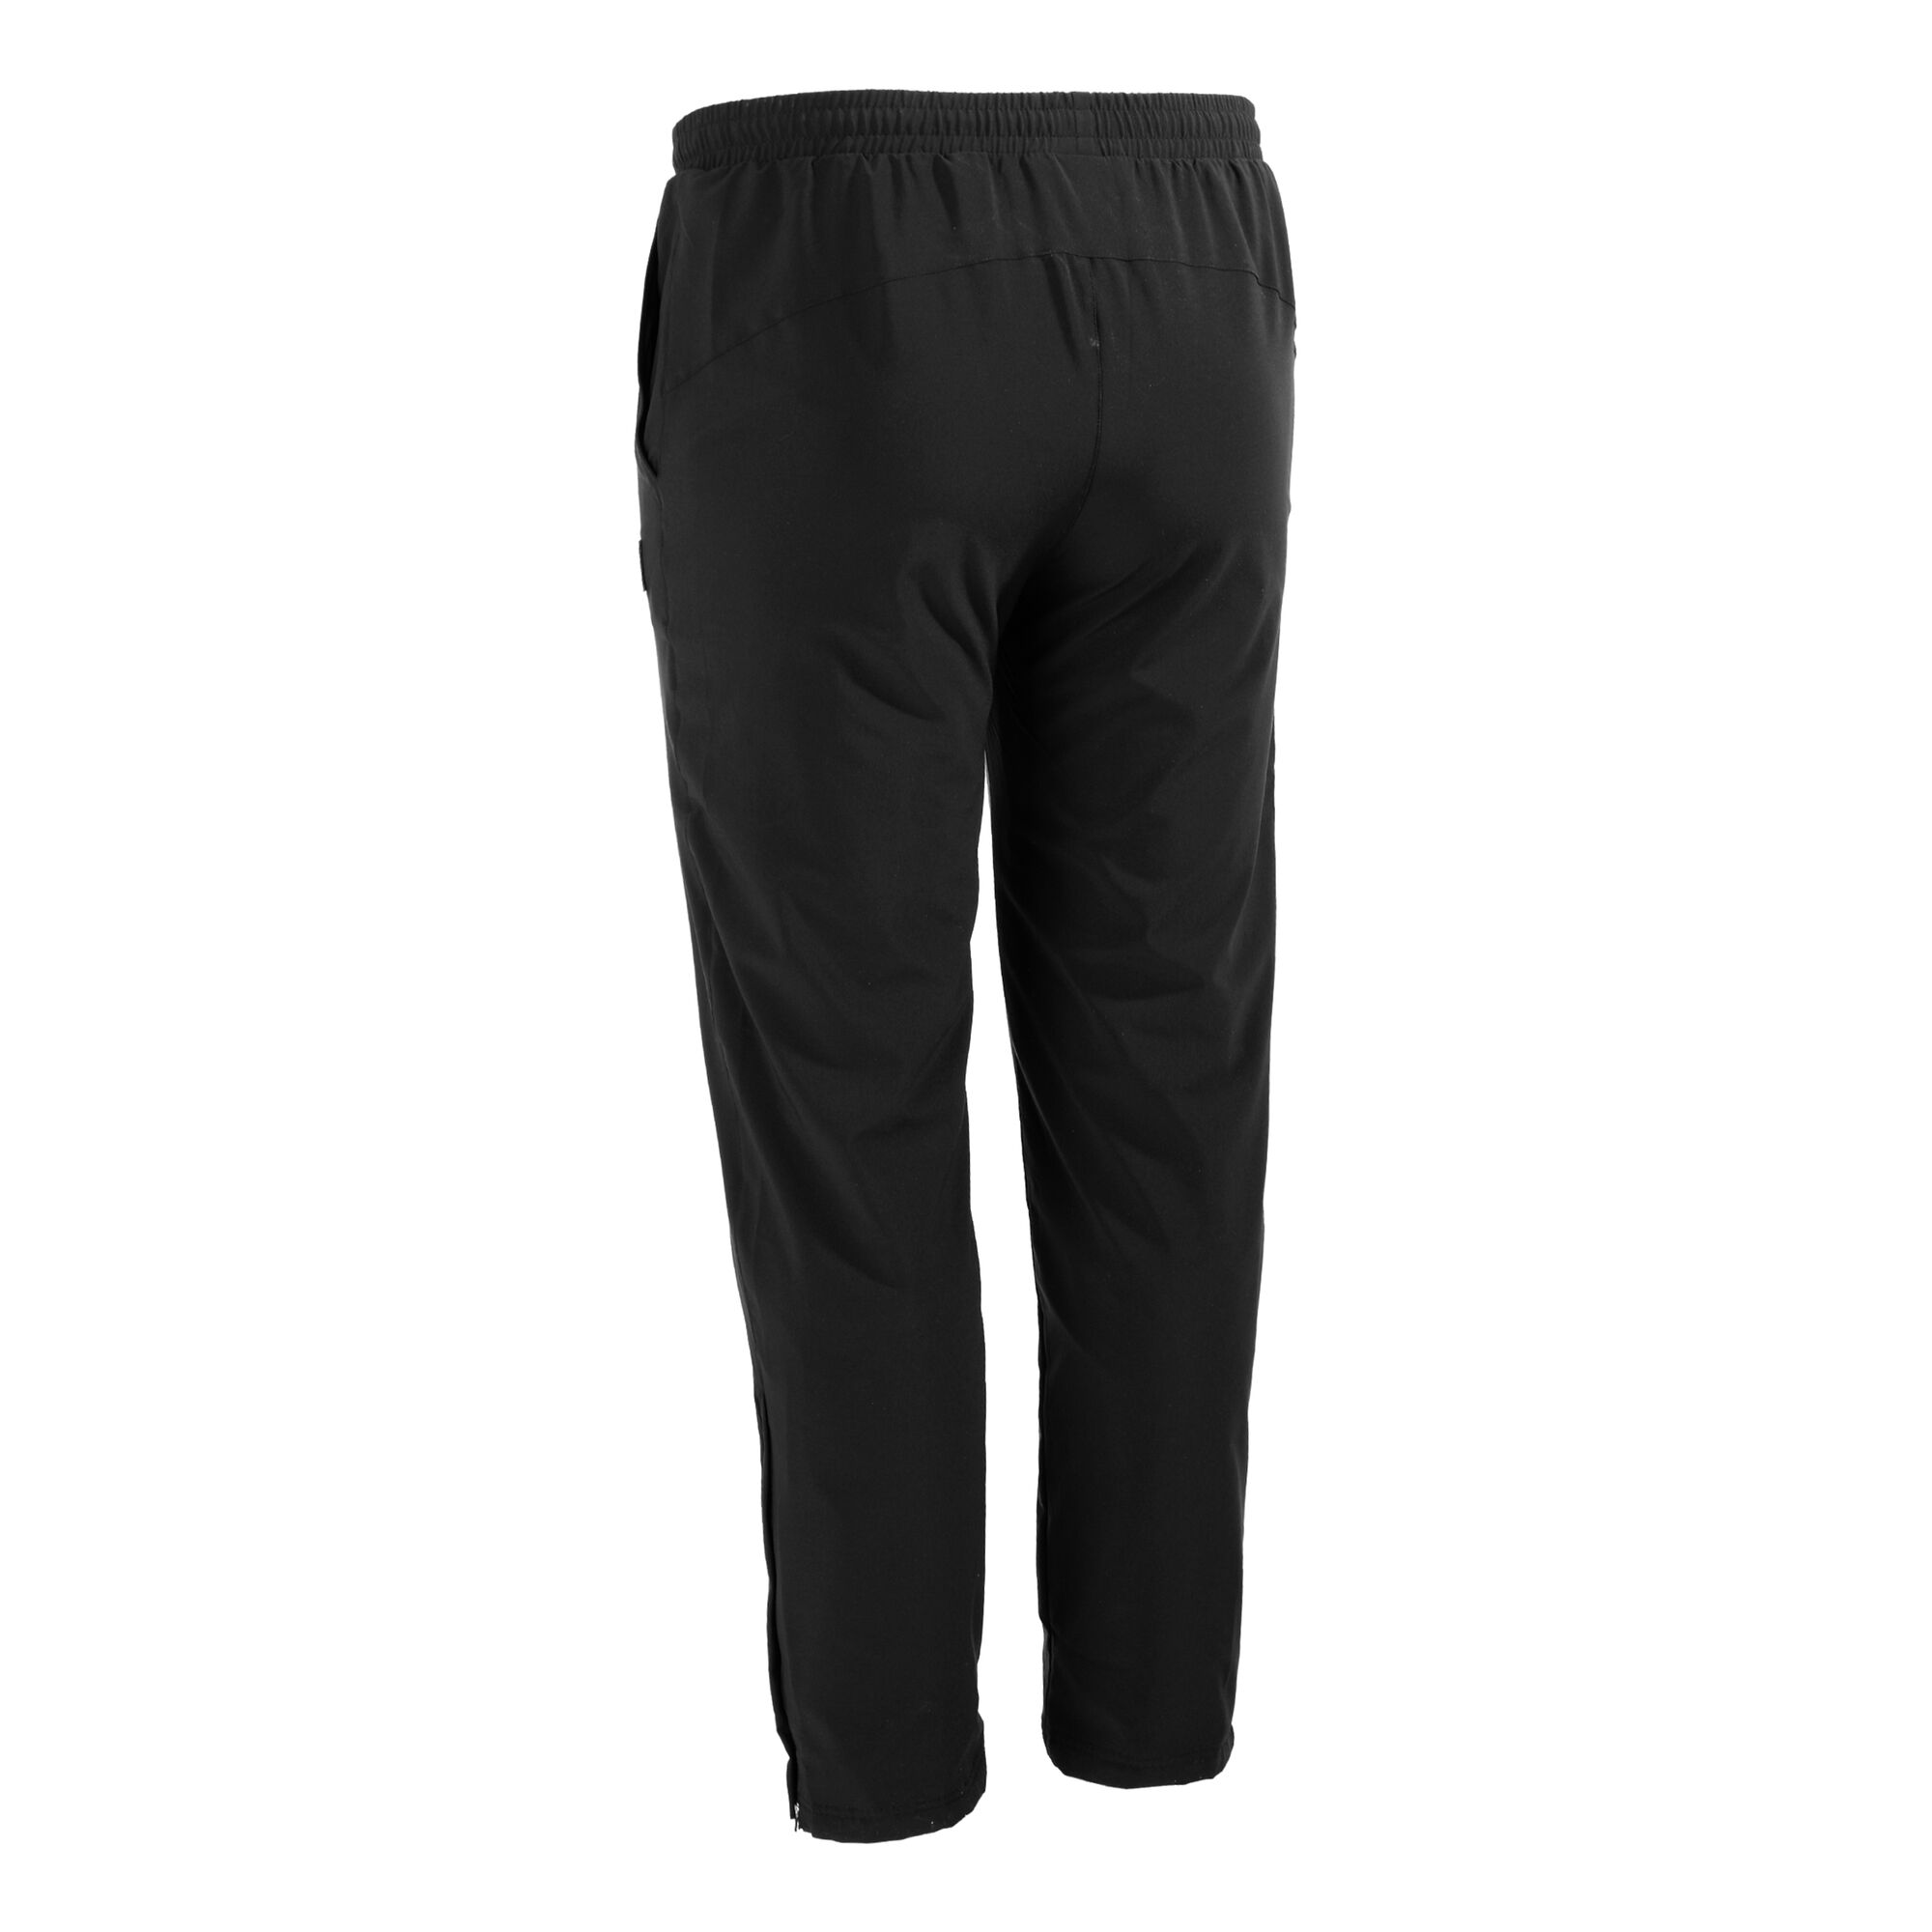 Buy Fila Pro 3 Training Pants Men Black, Dark Grey online